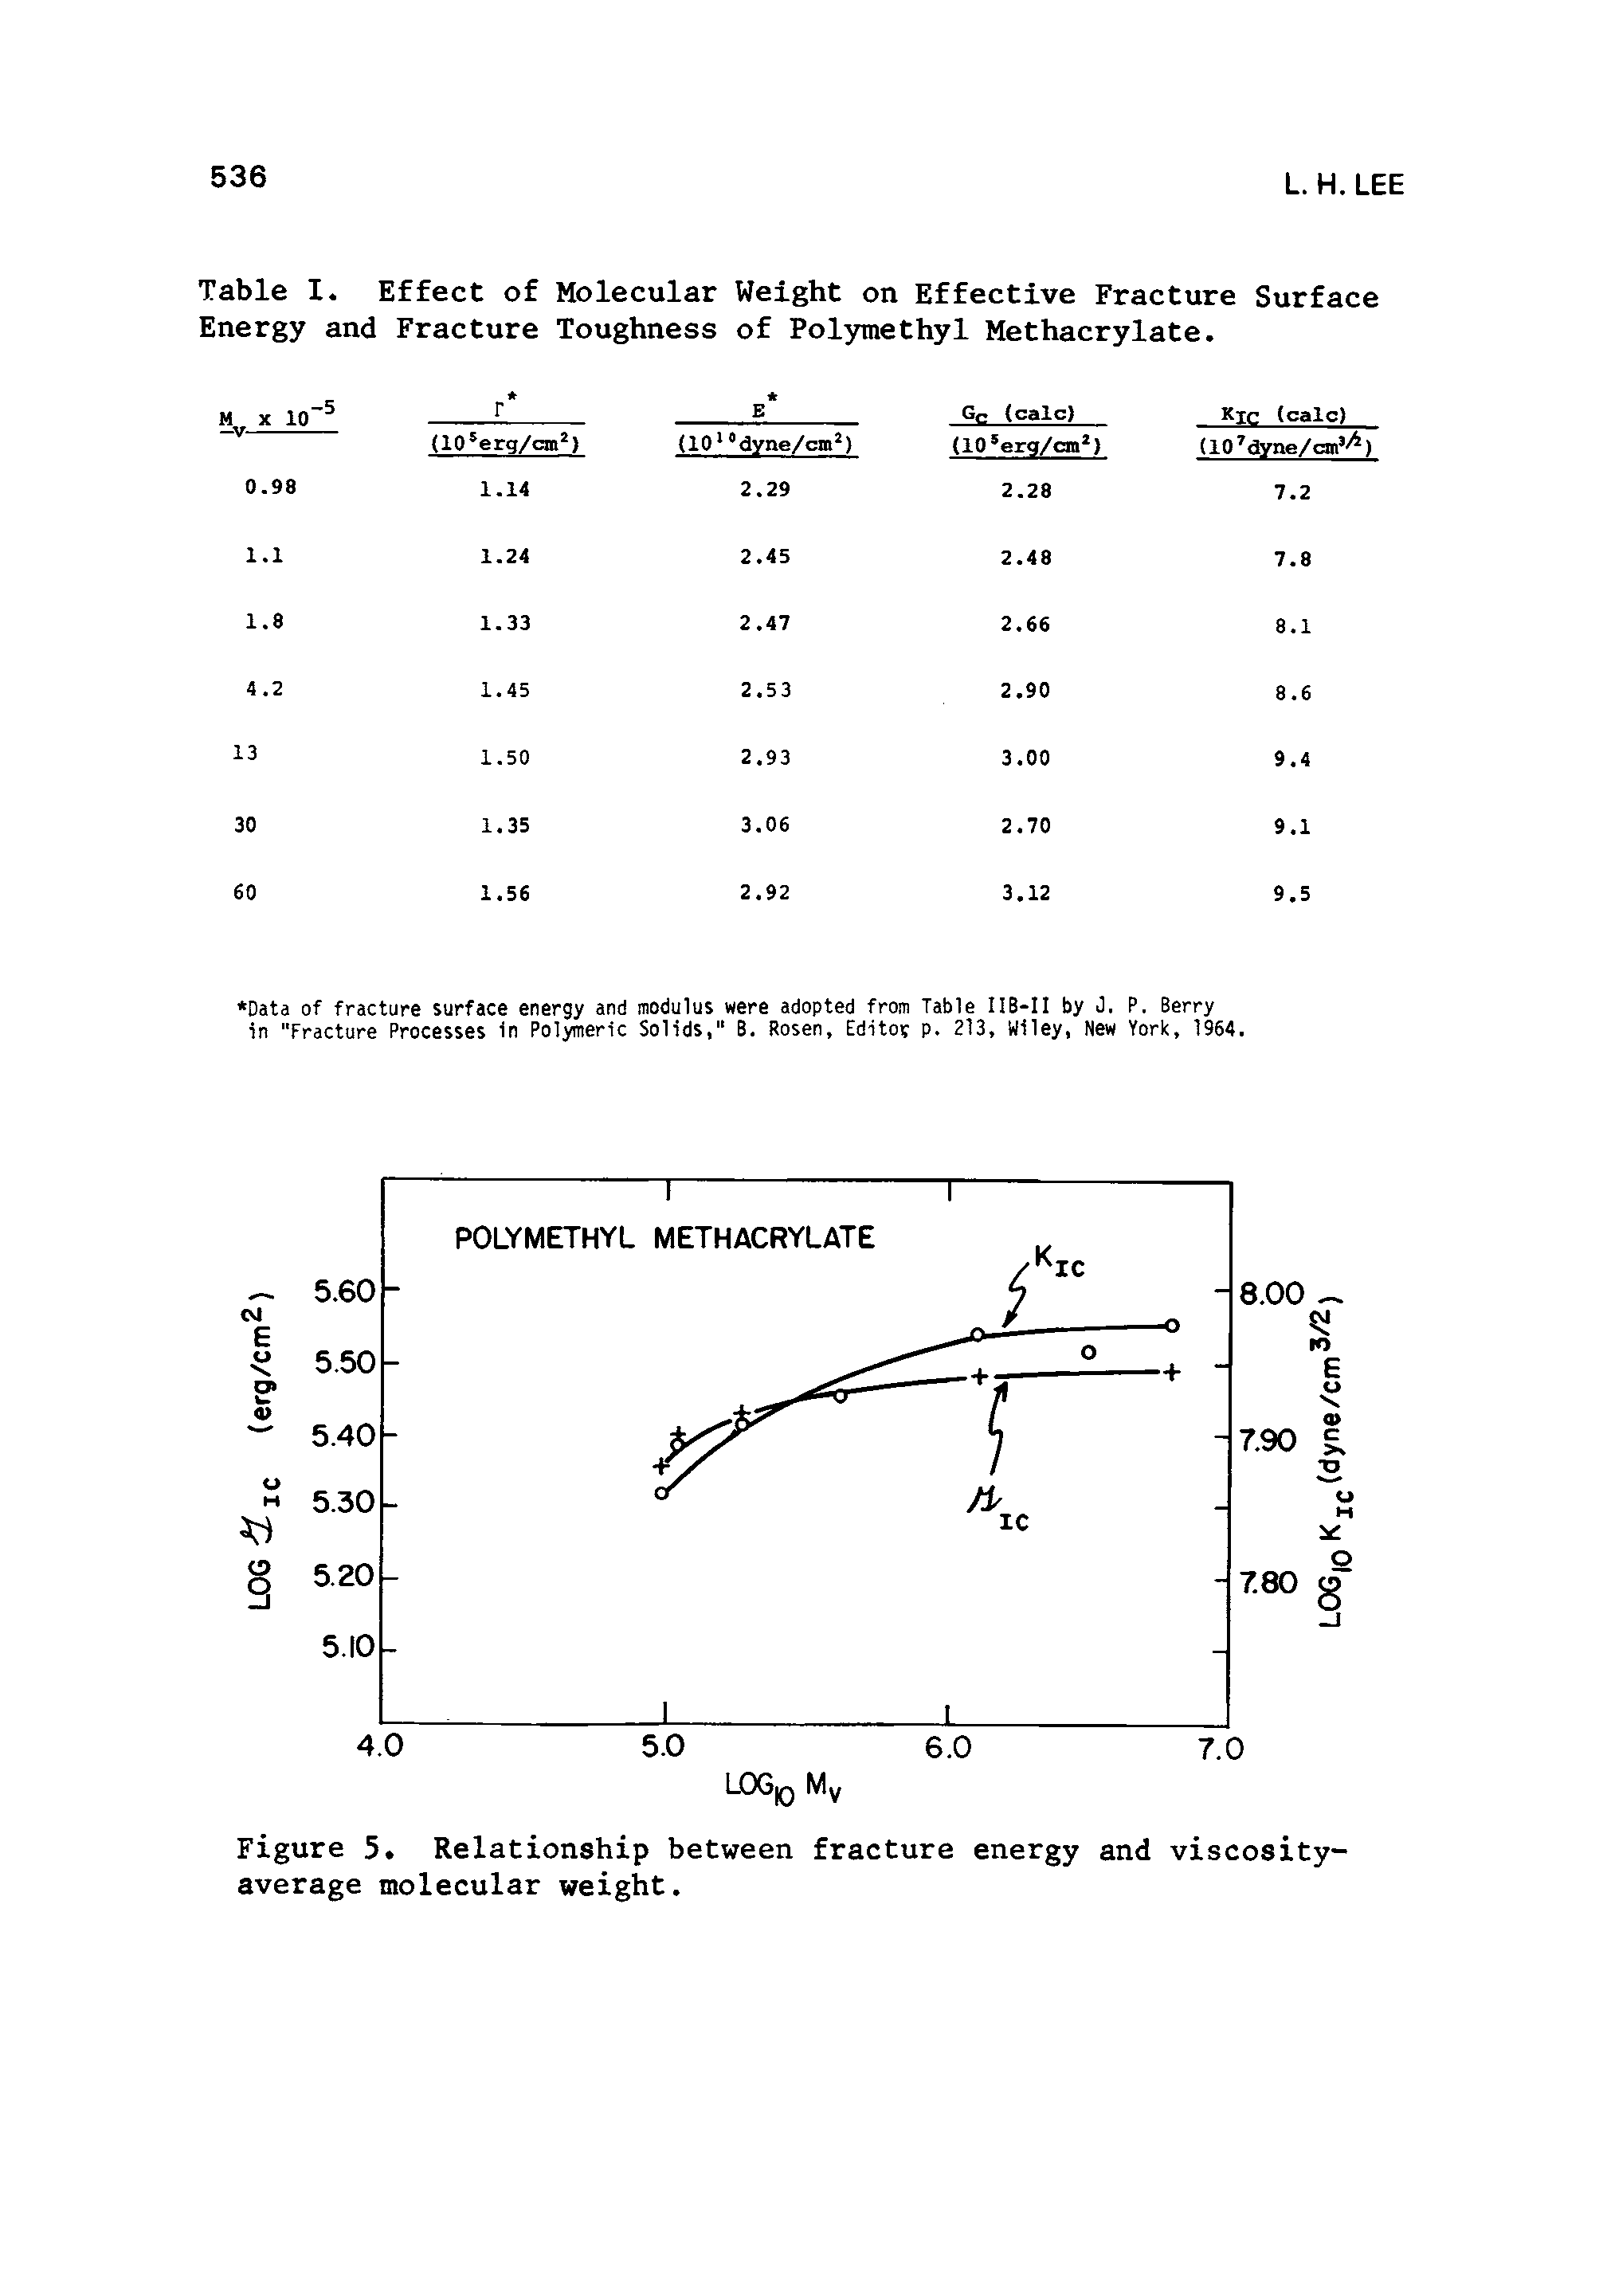 Figure 5. Relationship between fracture energy and viscosity-average molecular weight.